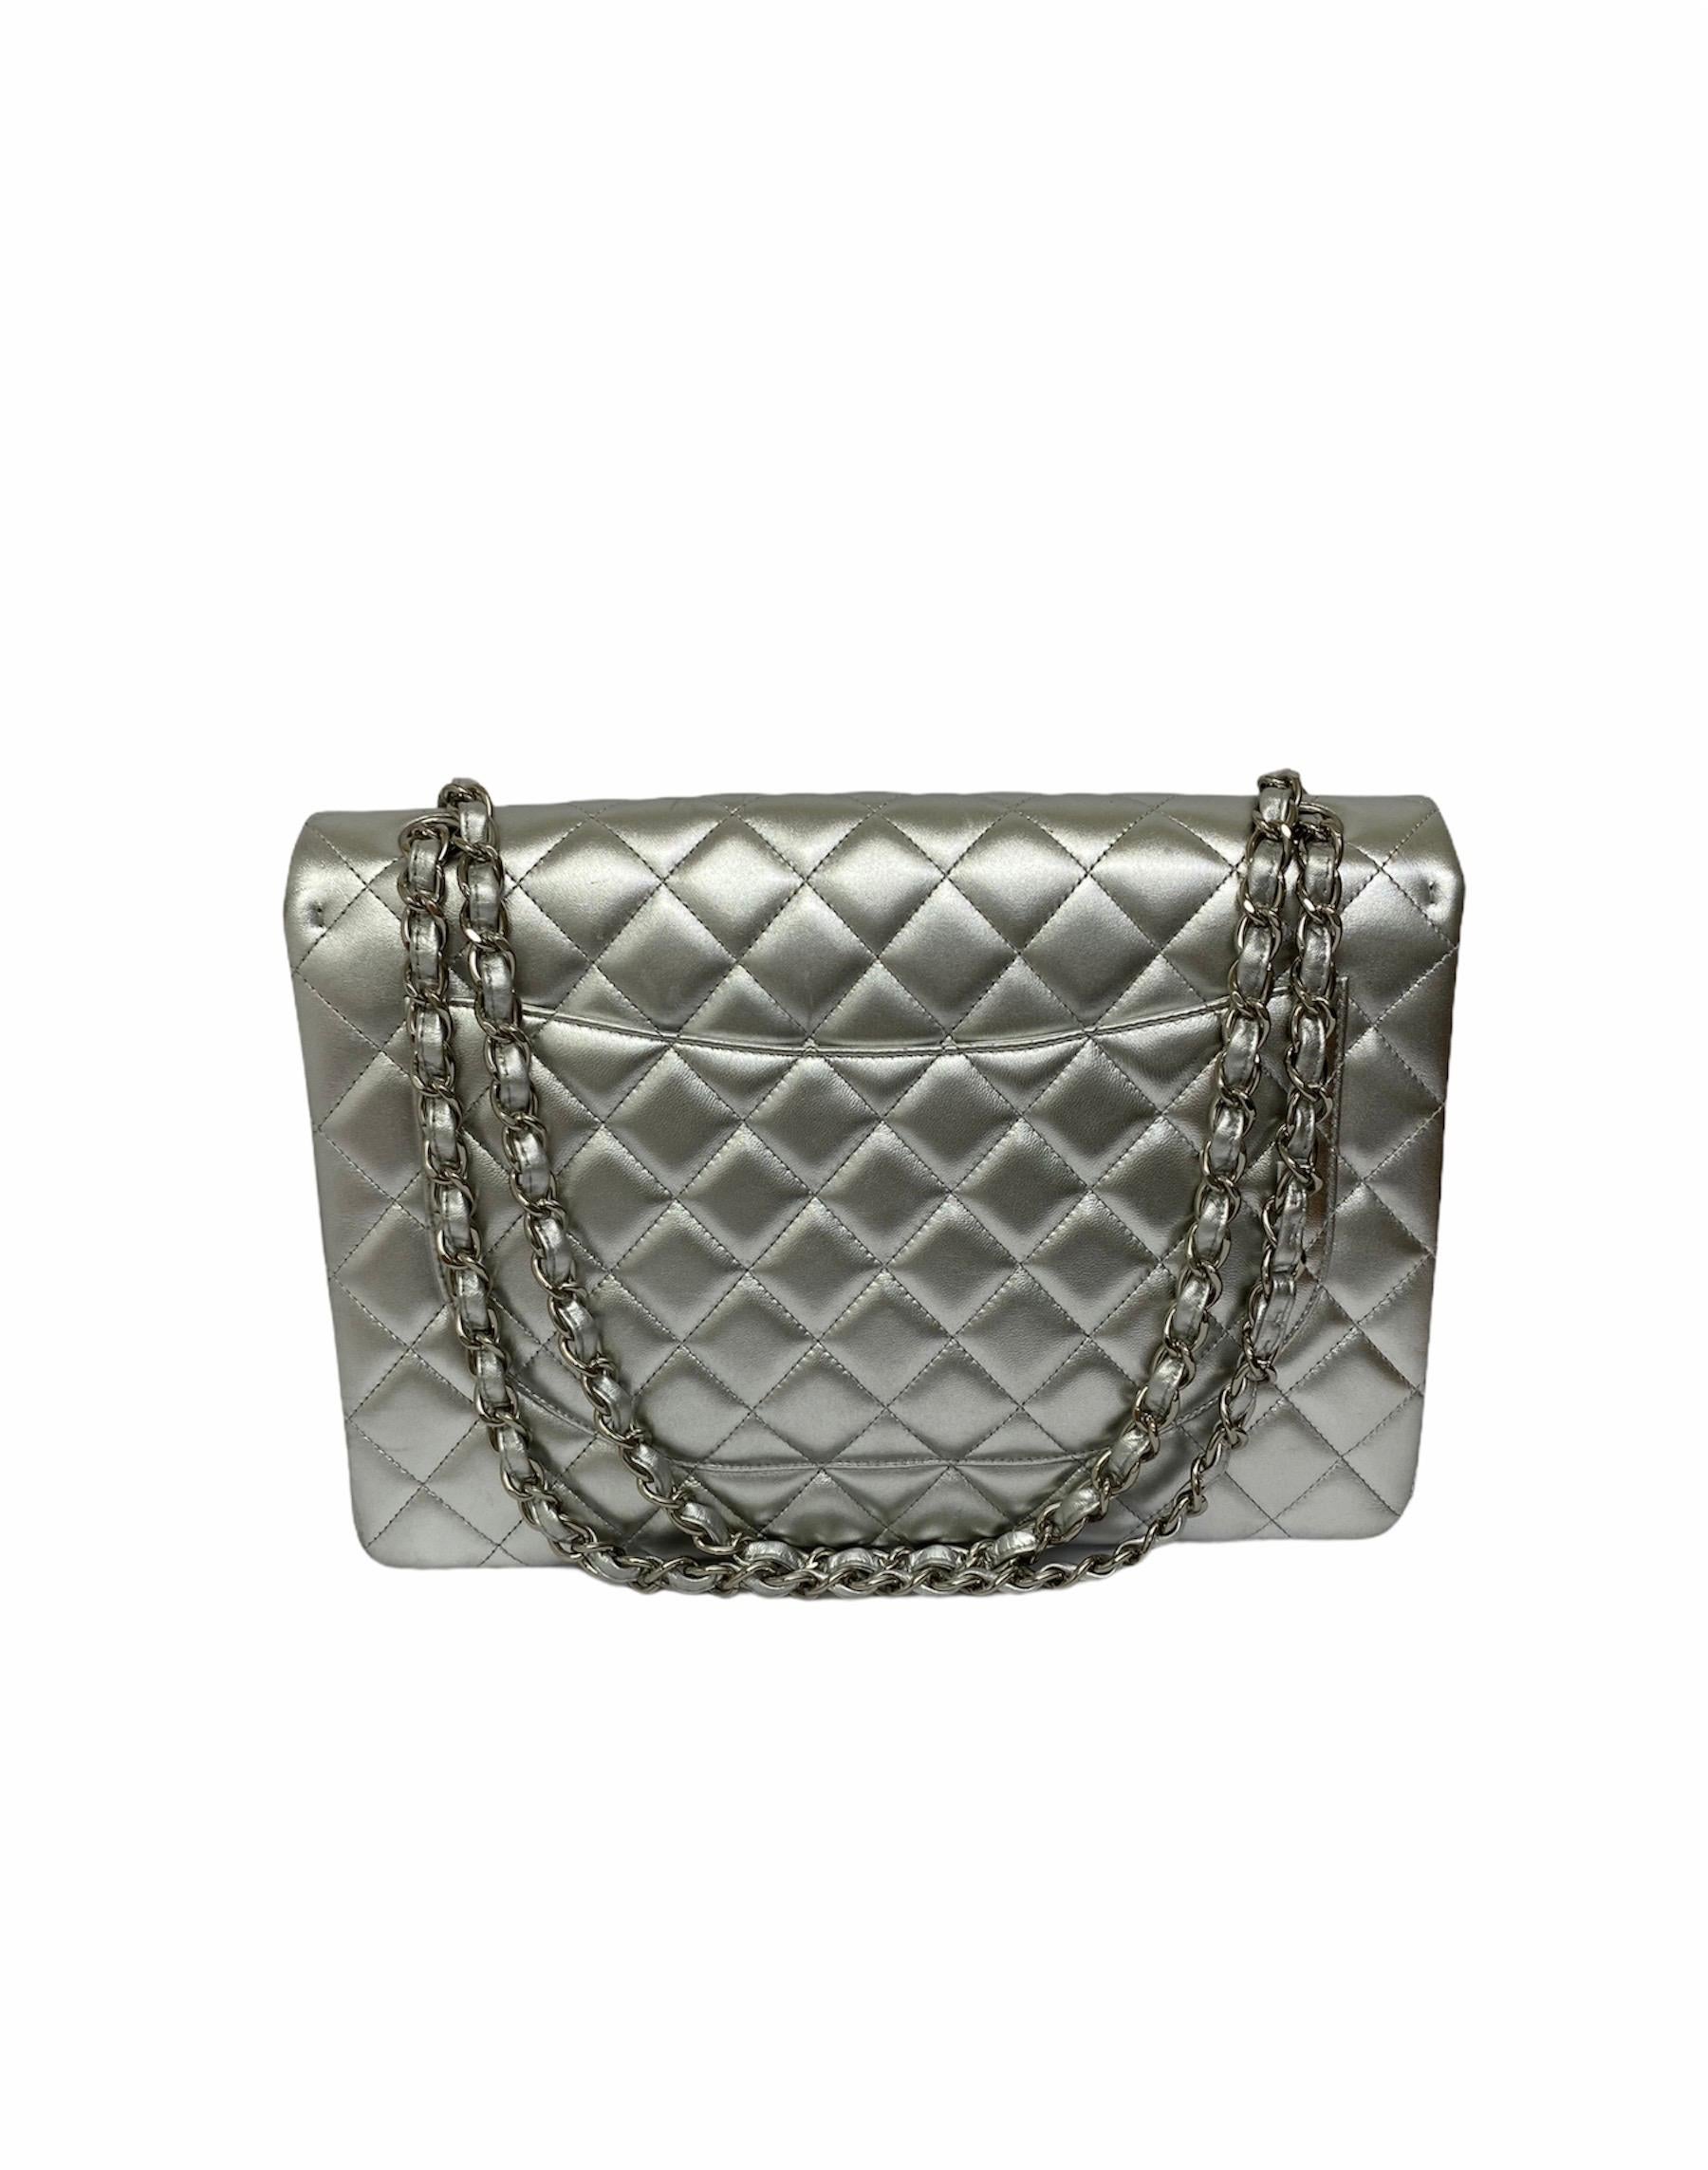 Women's Chanel Silver Leather Maxi Jumbo Bag 